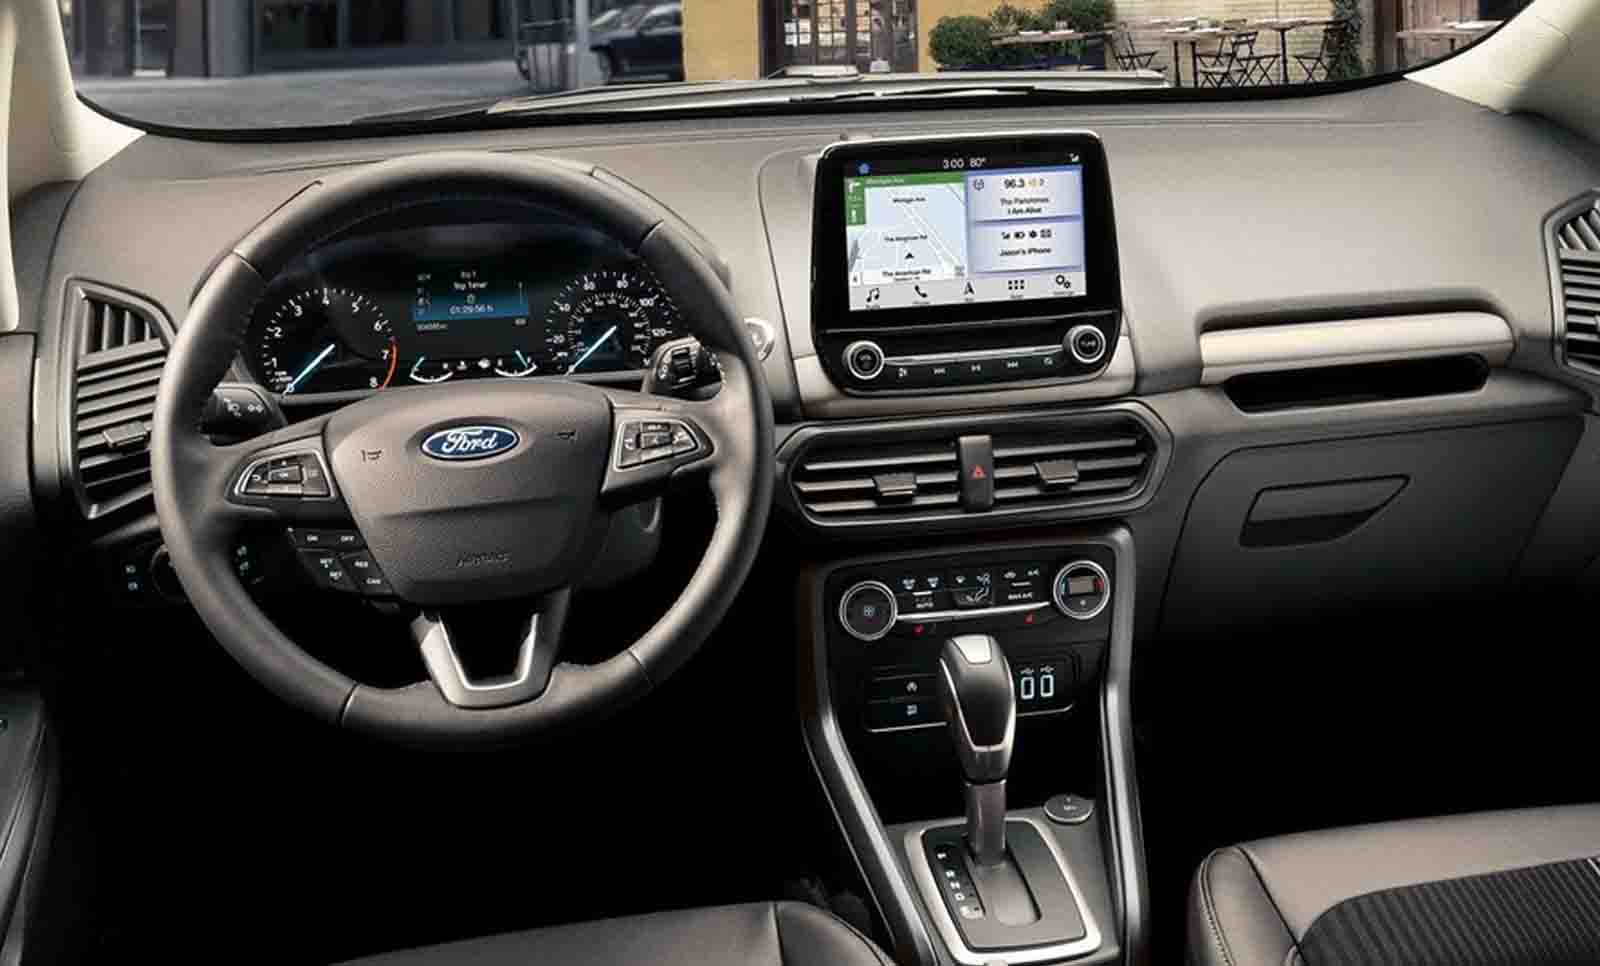 Ford-Ecosport